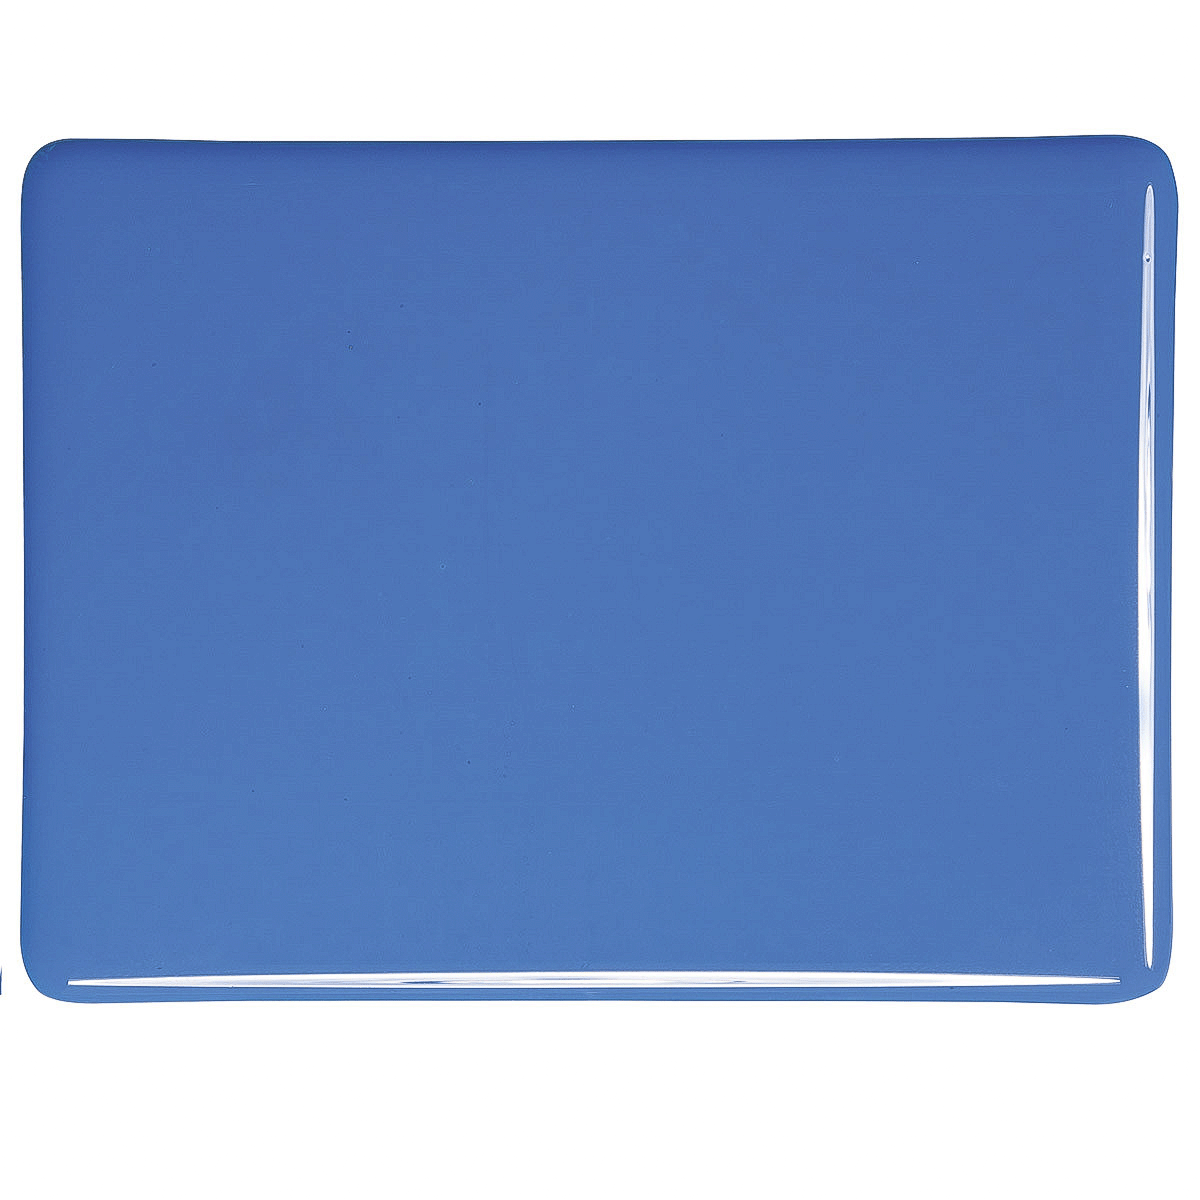 Egyptian Blue, 3 mm